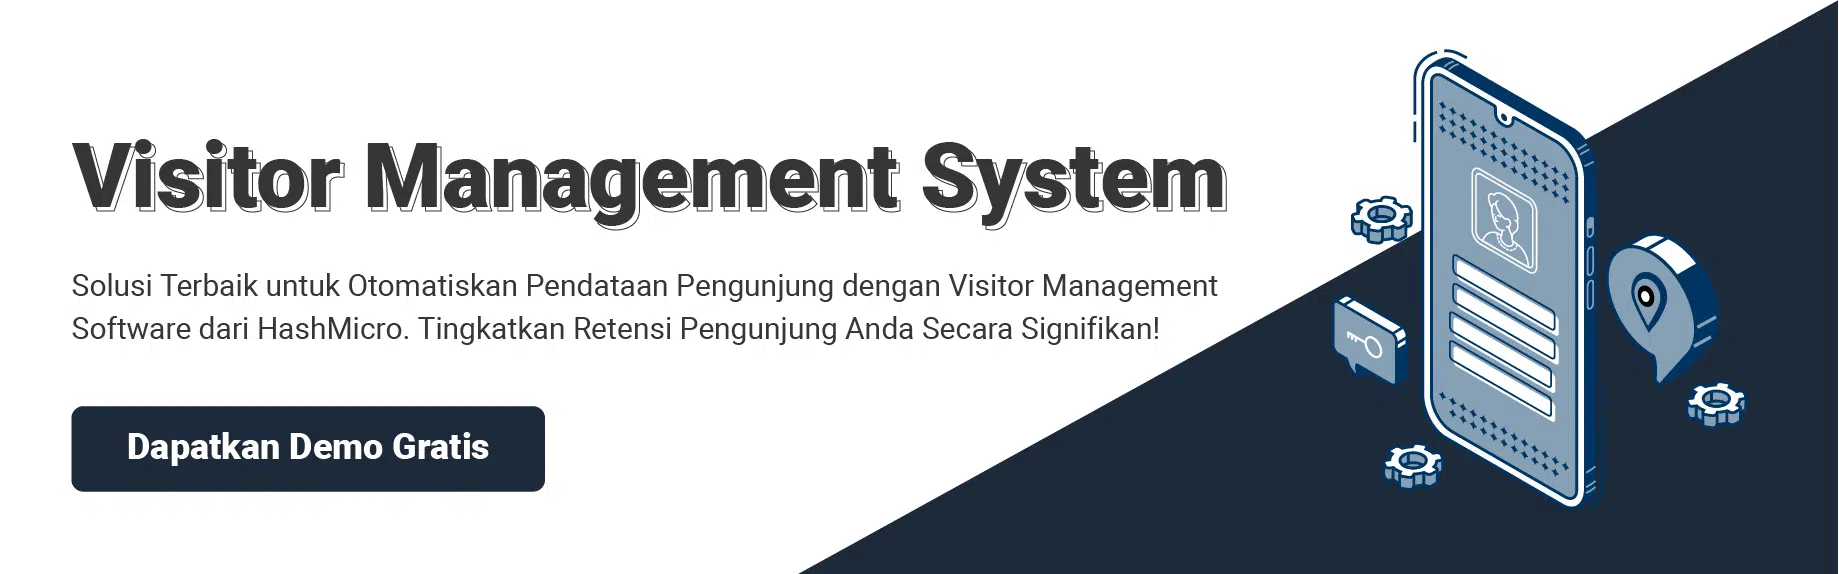 VisitorManagementSystem